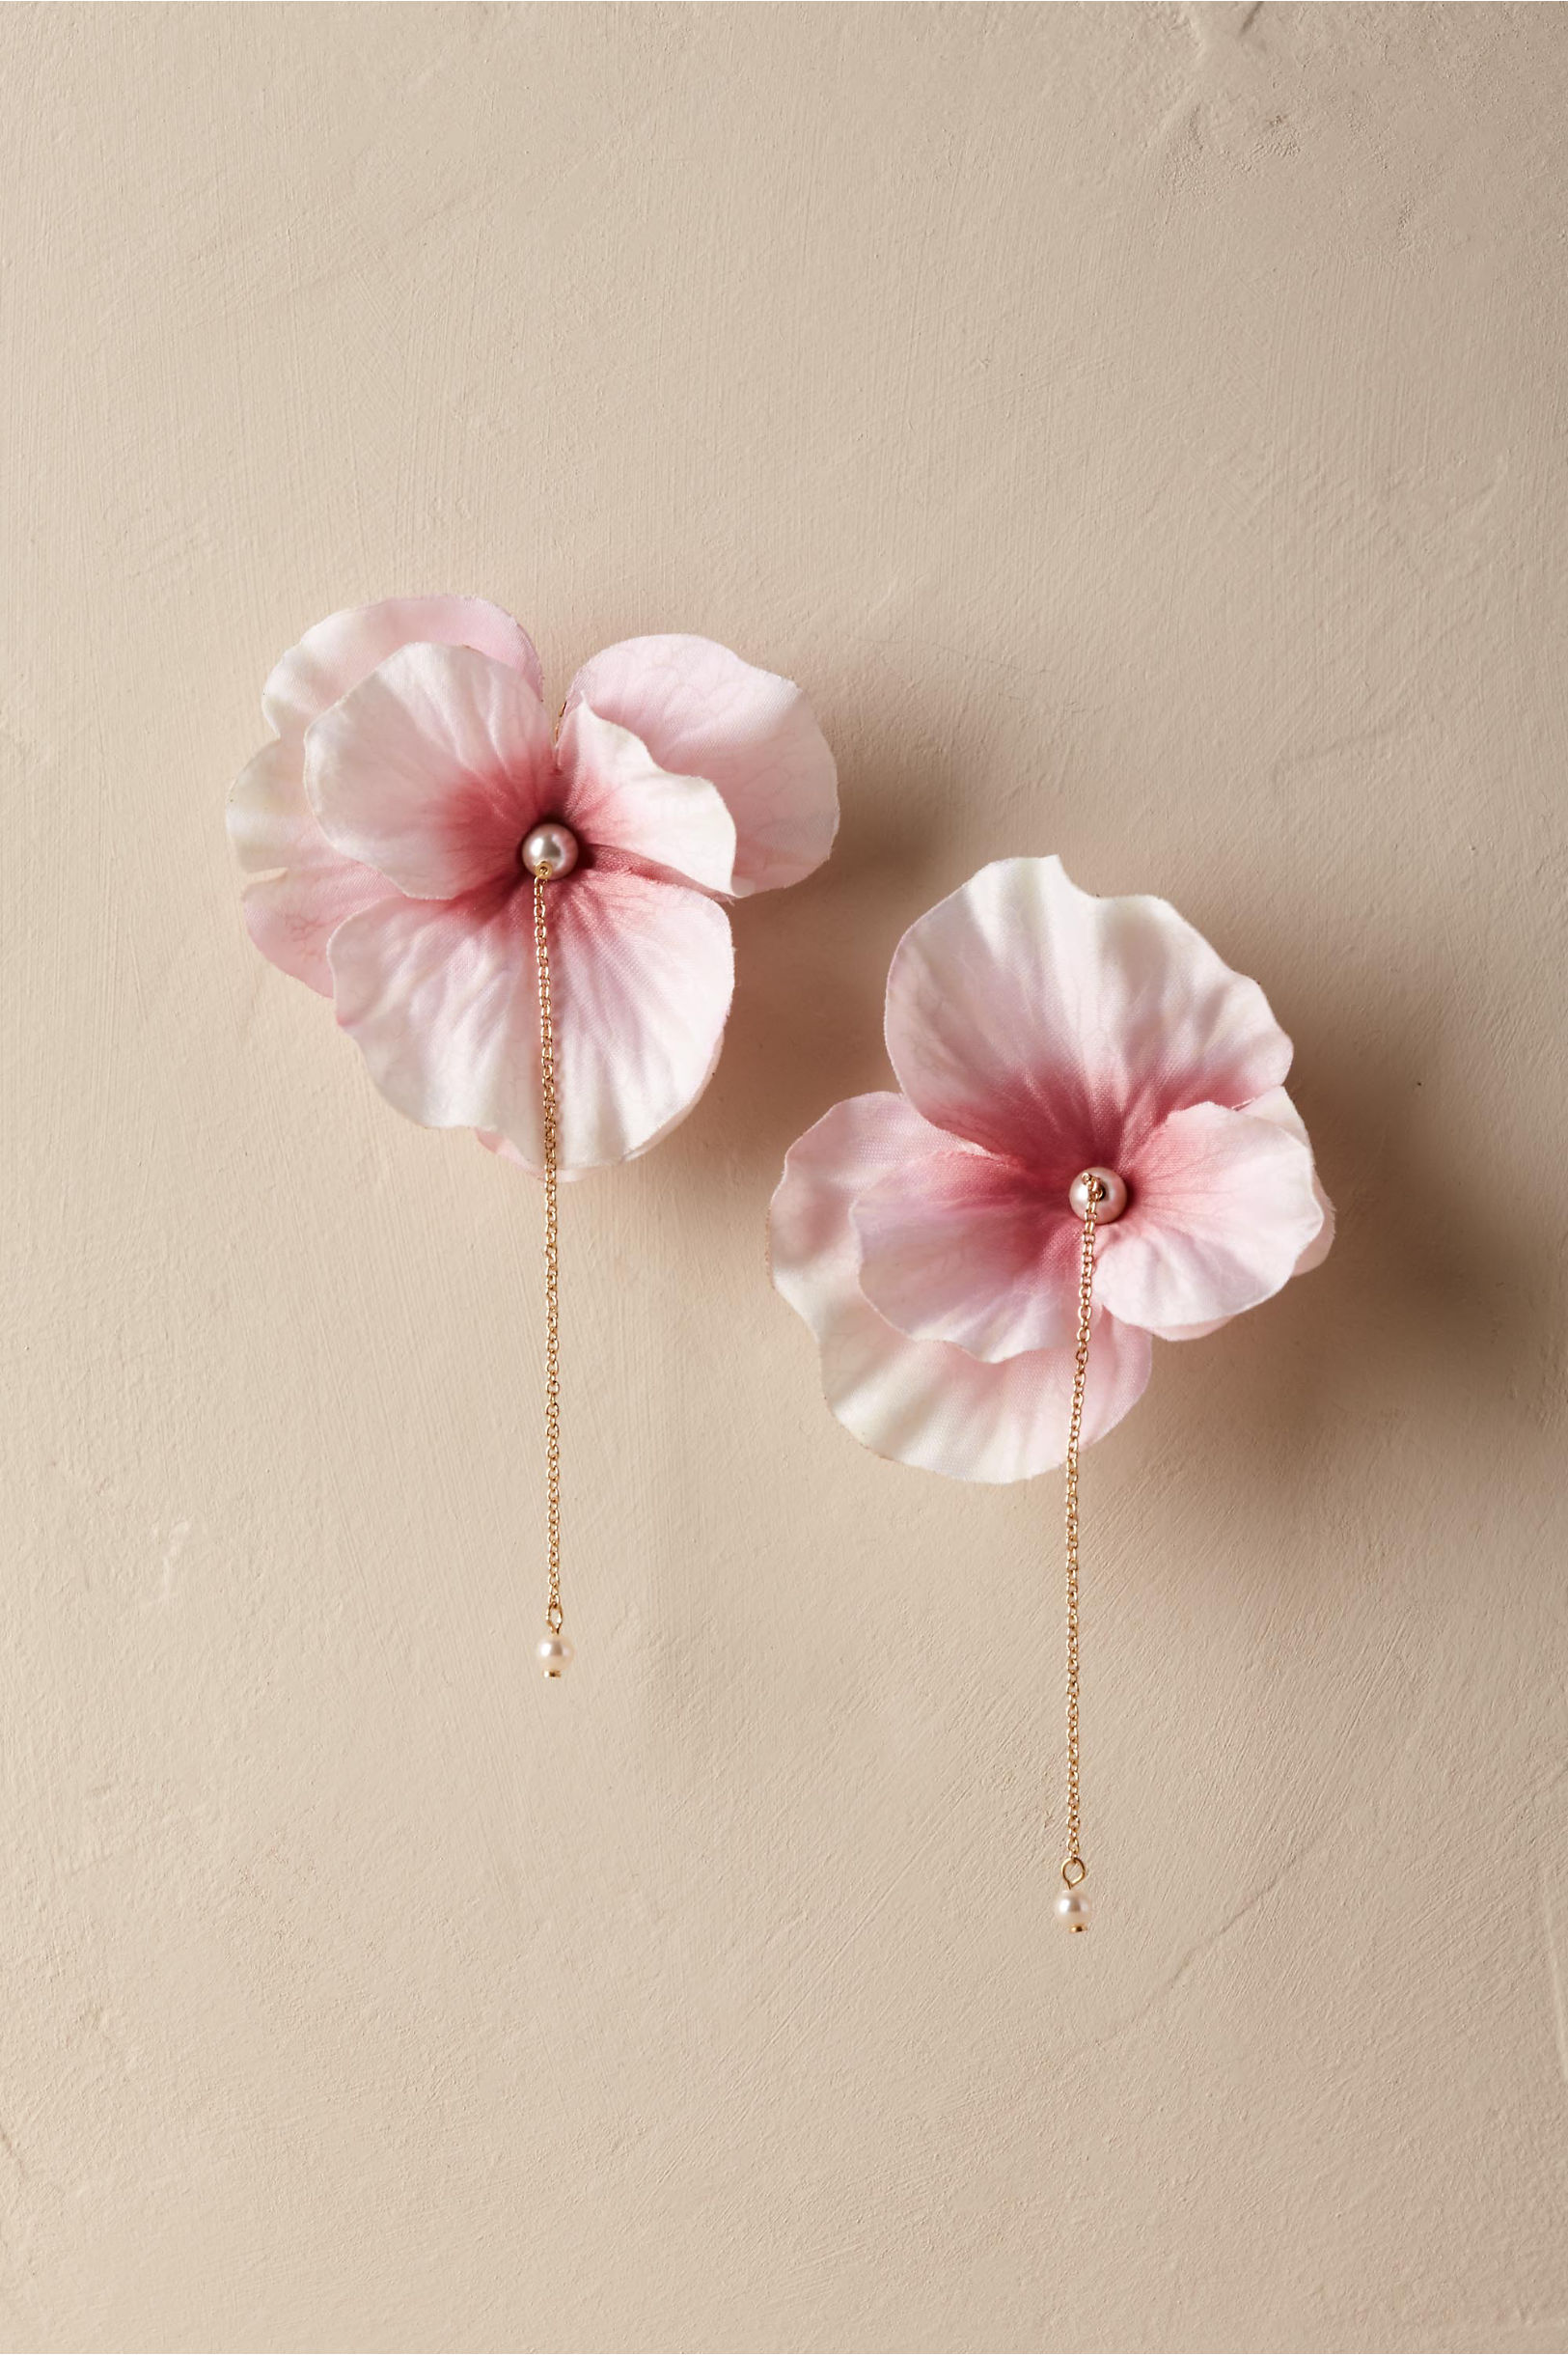 Blushing Cherry Blossom Earrings Gold in Bride | BHLDN